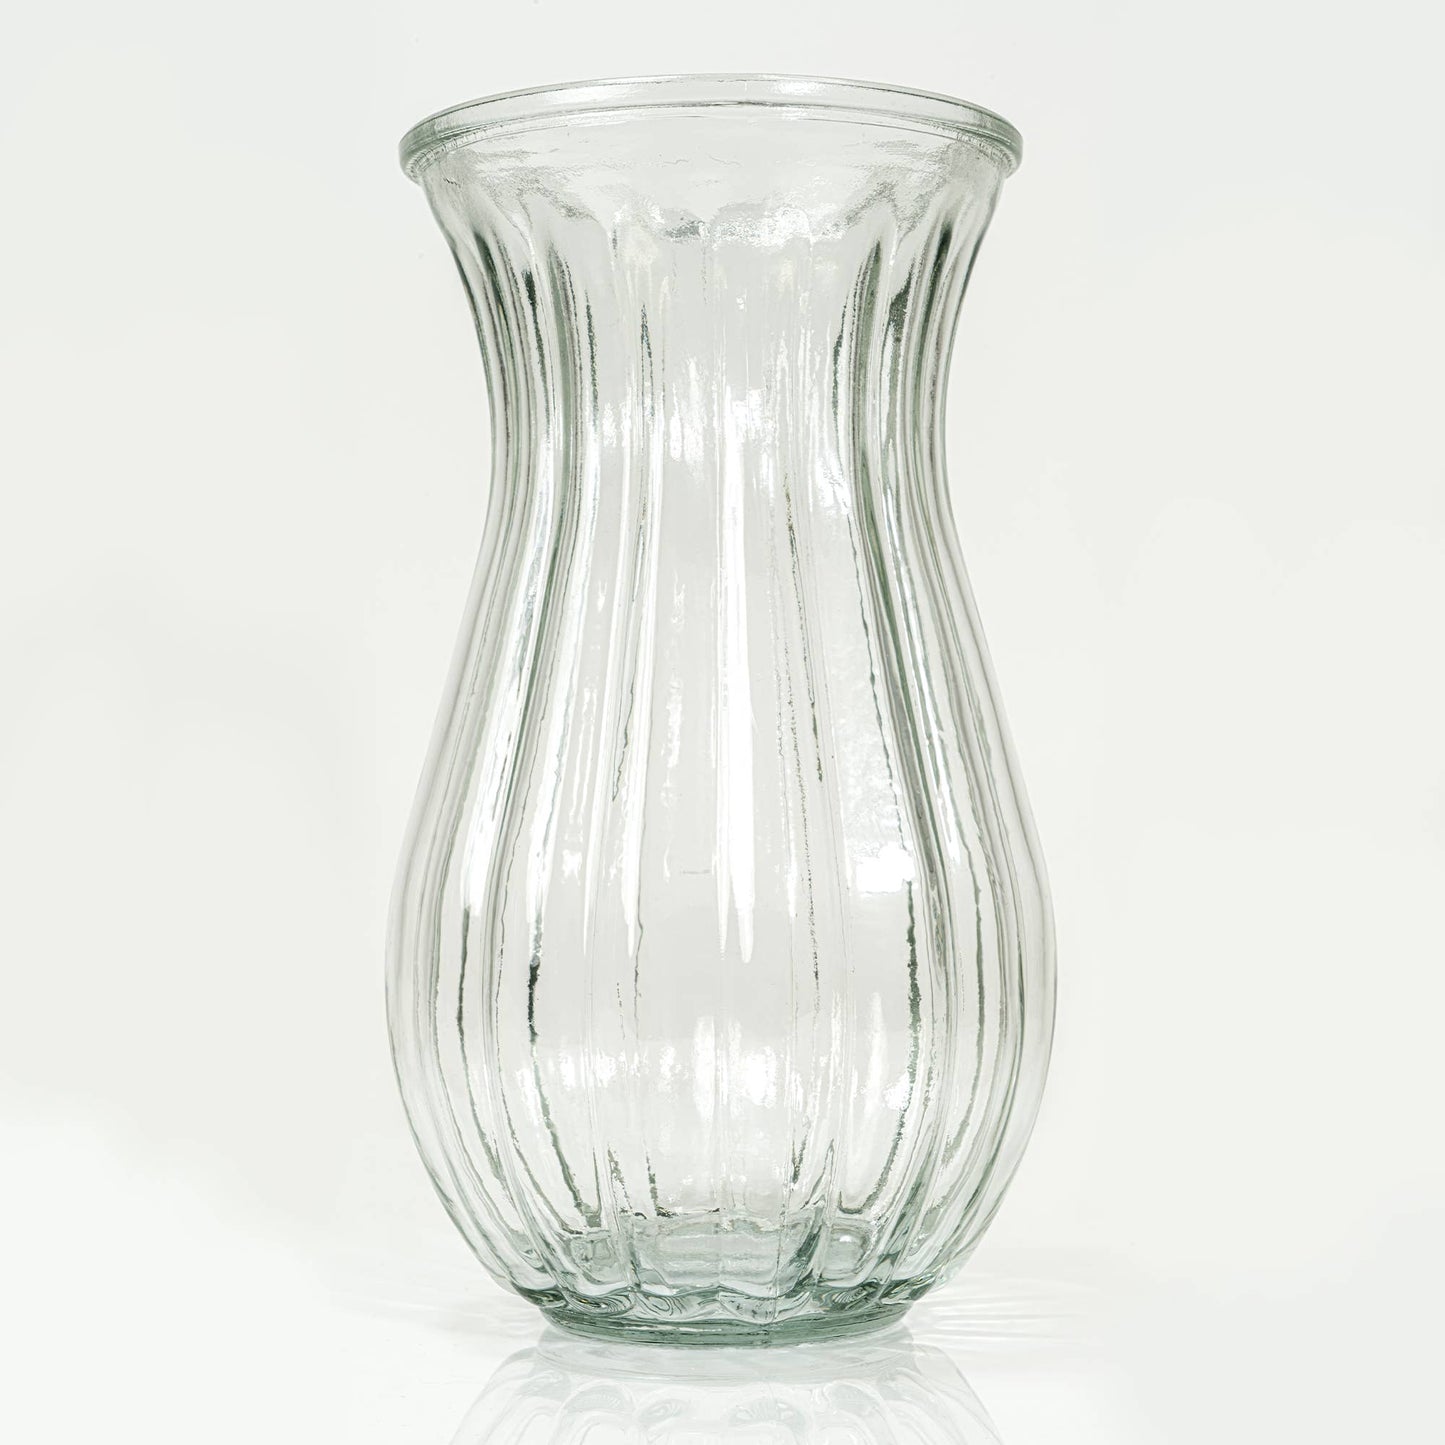 Economy Floral Vase 9"